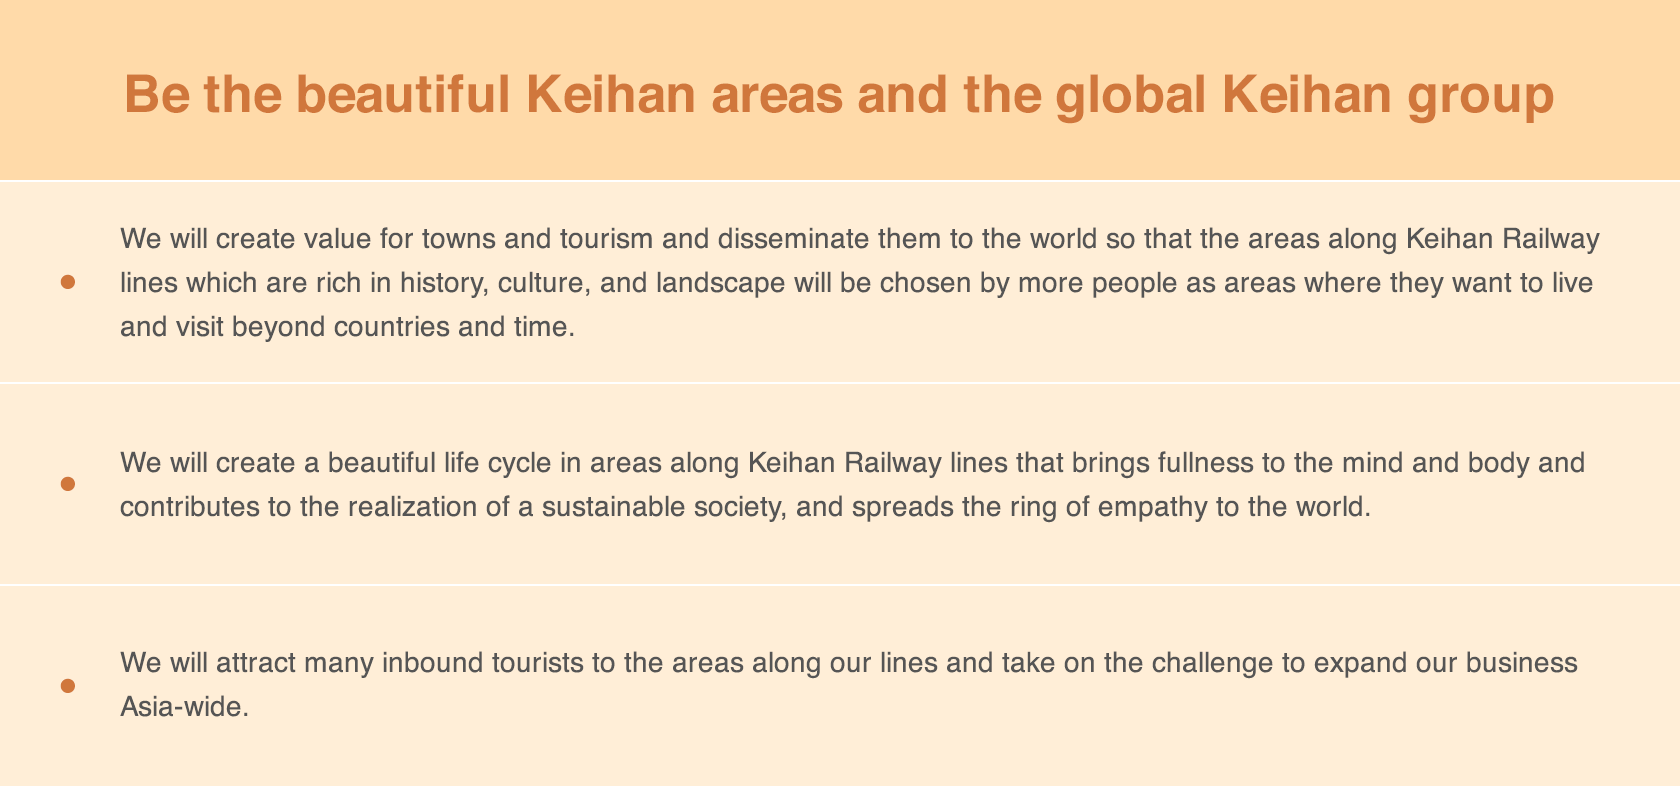 Be the beautiful Keihan areas and the global Keihan group